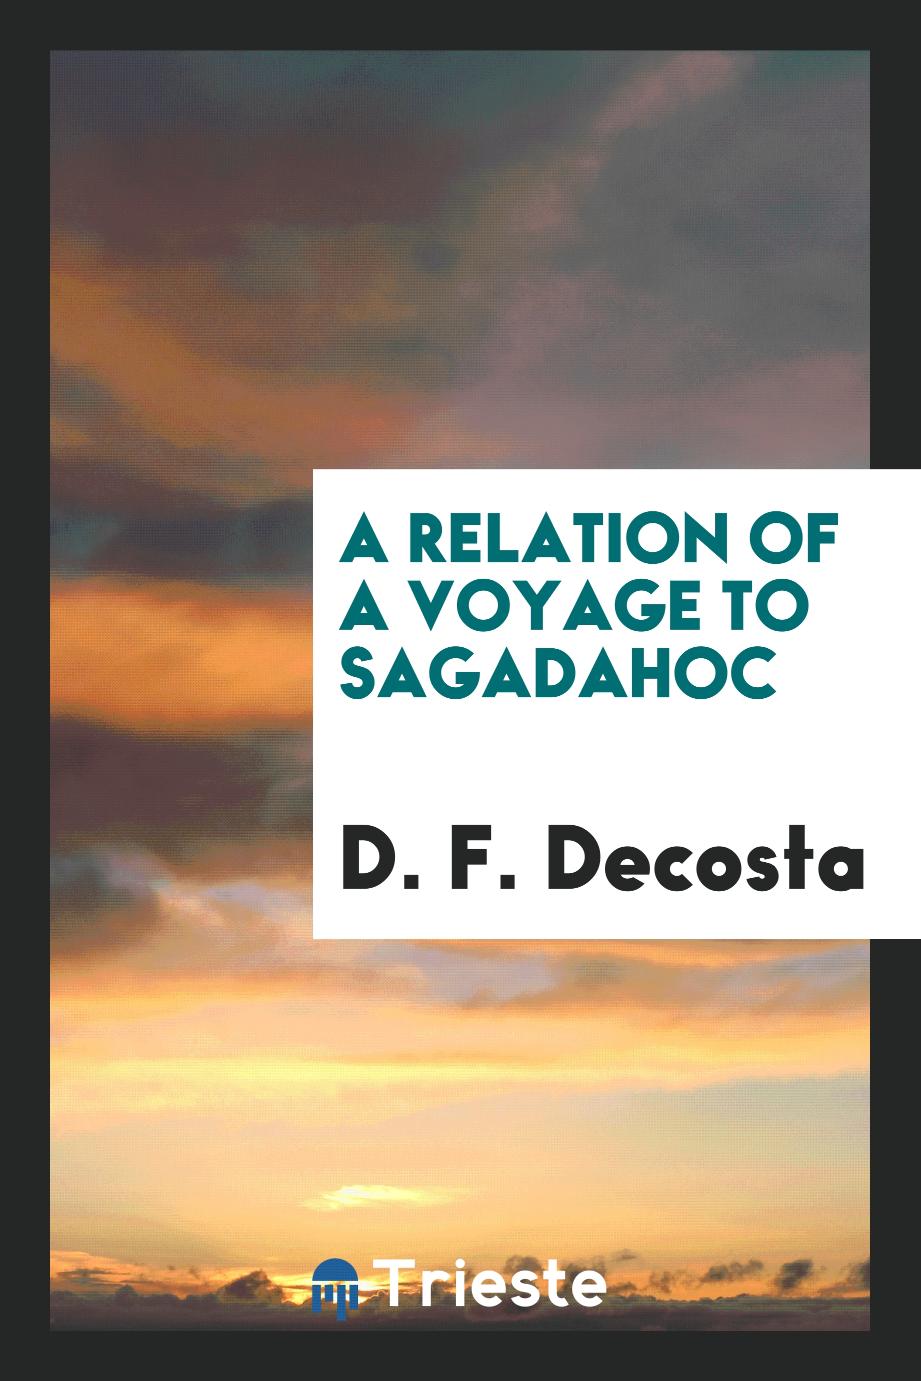 A relation of a voyage to Sagadahoc